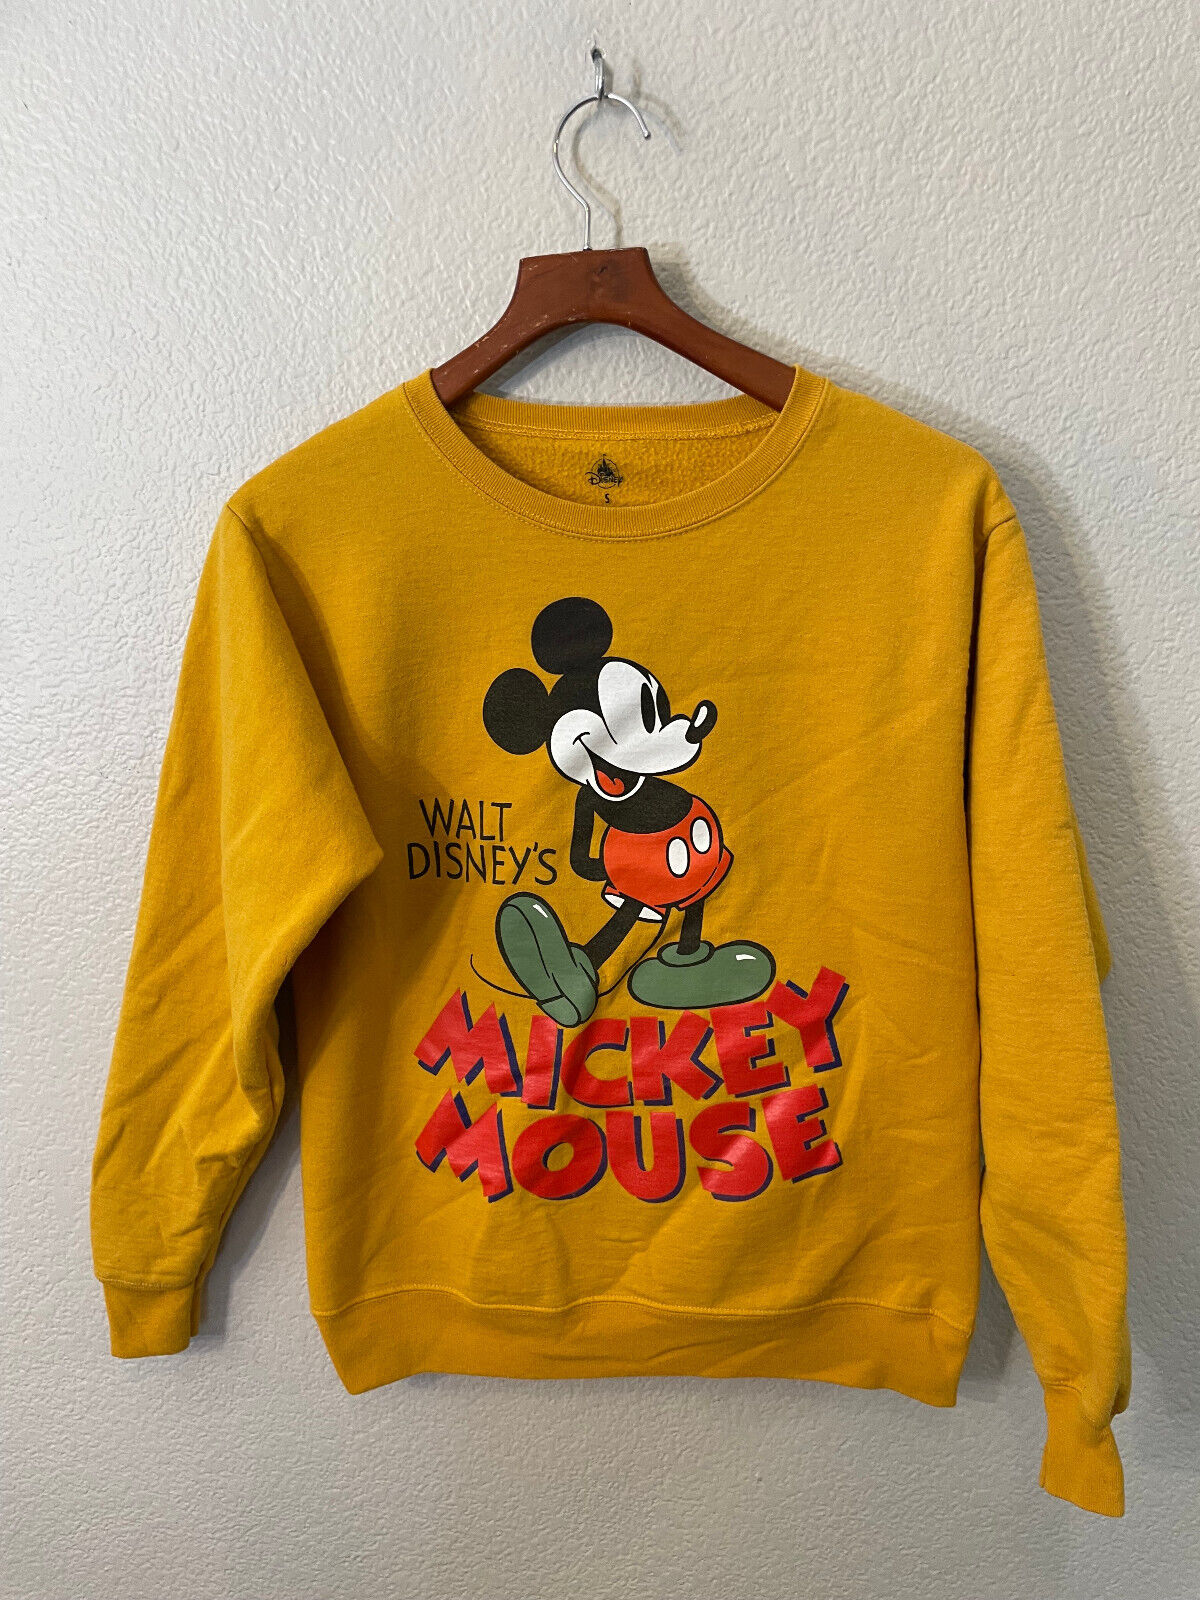 Mickey Mouse Sweatshirt Men's Small Gold Yellow Disney Crew Neck Lightweight